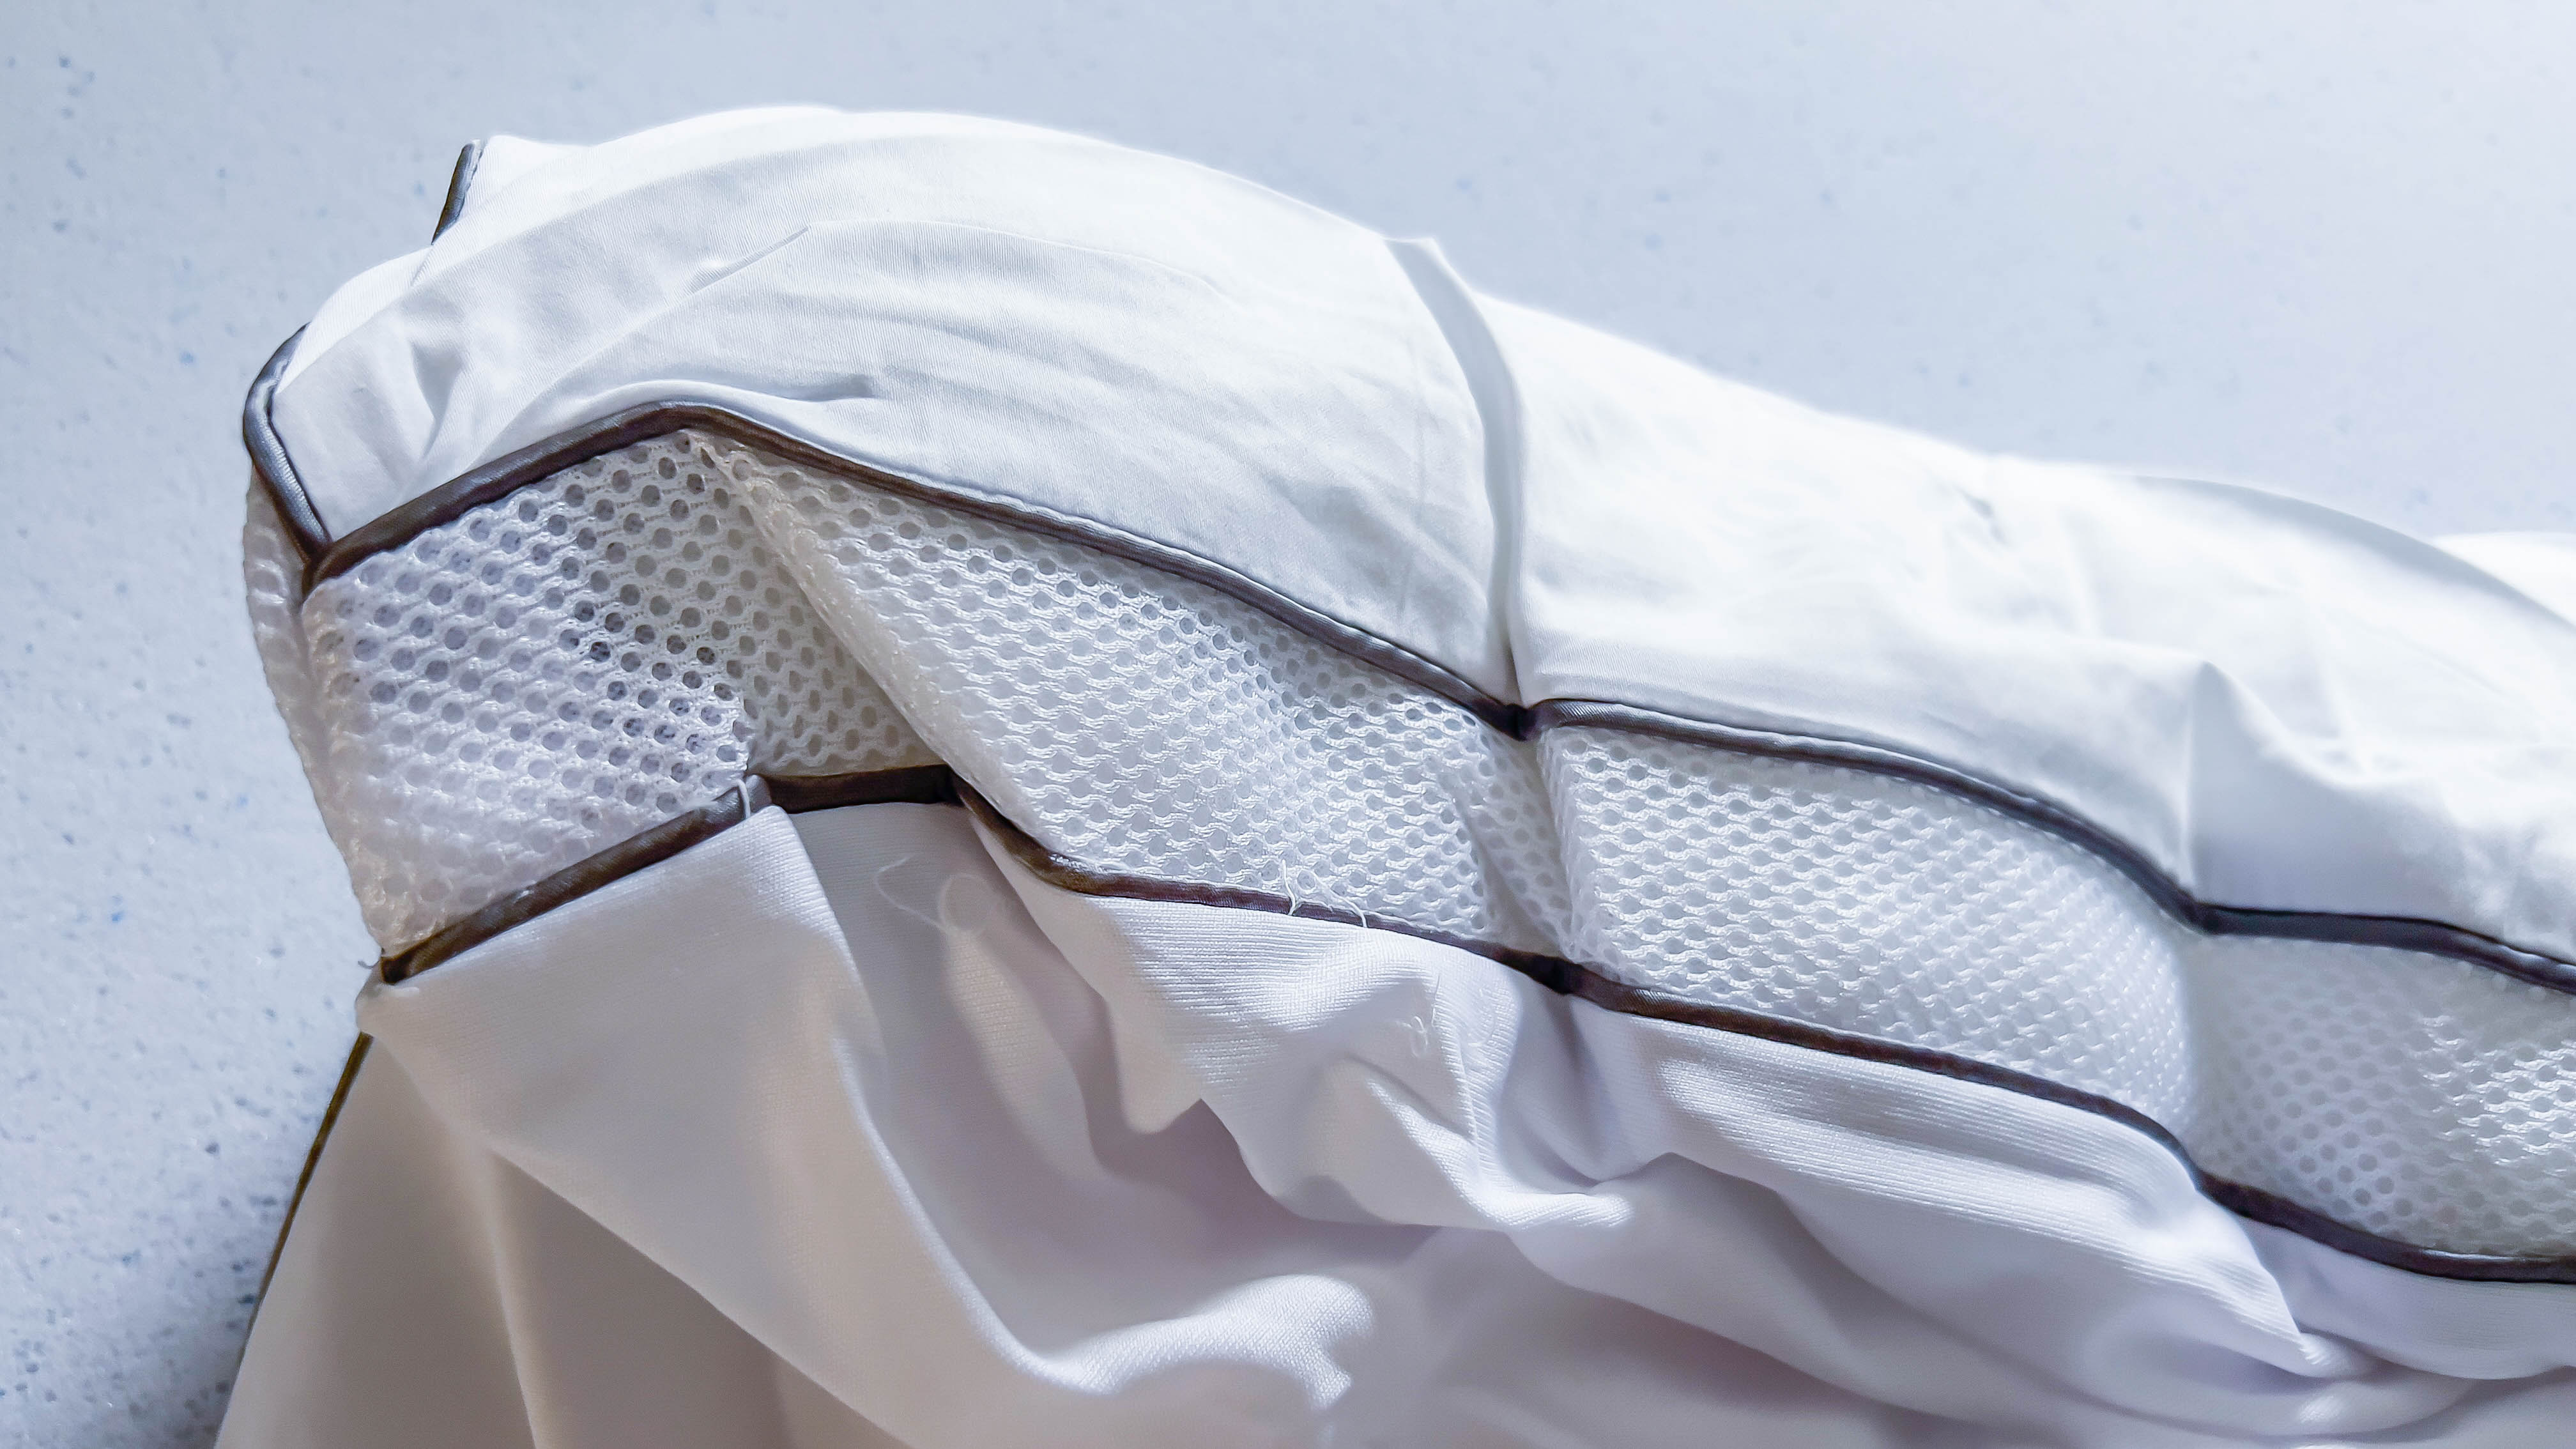 viscosoft serene hybrid mattress topper review